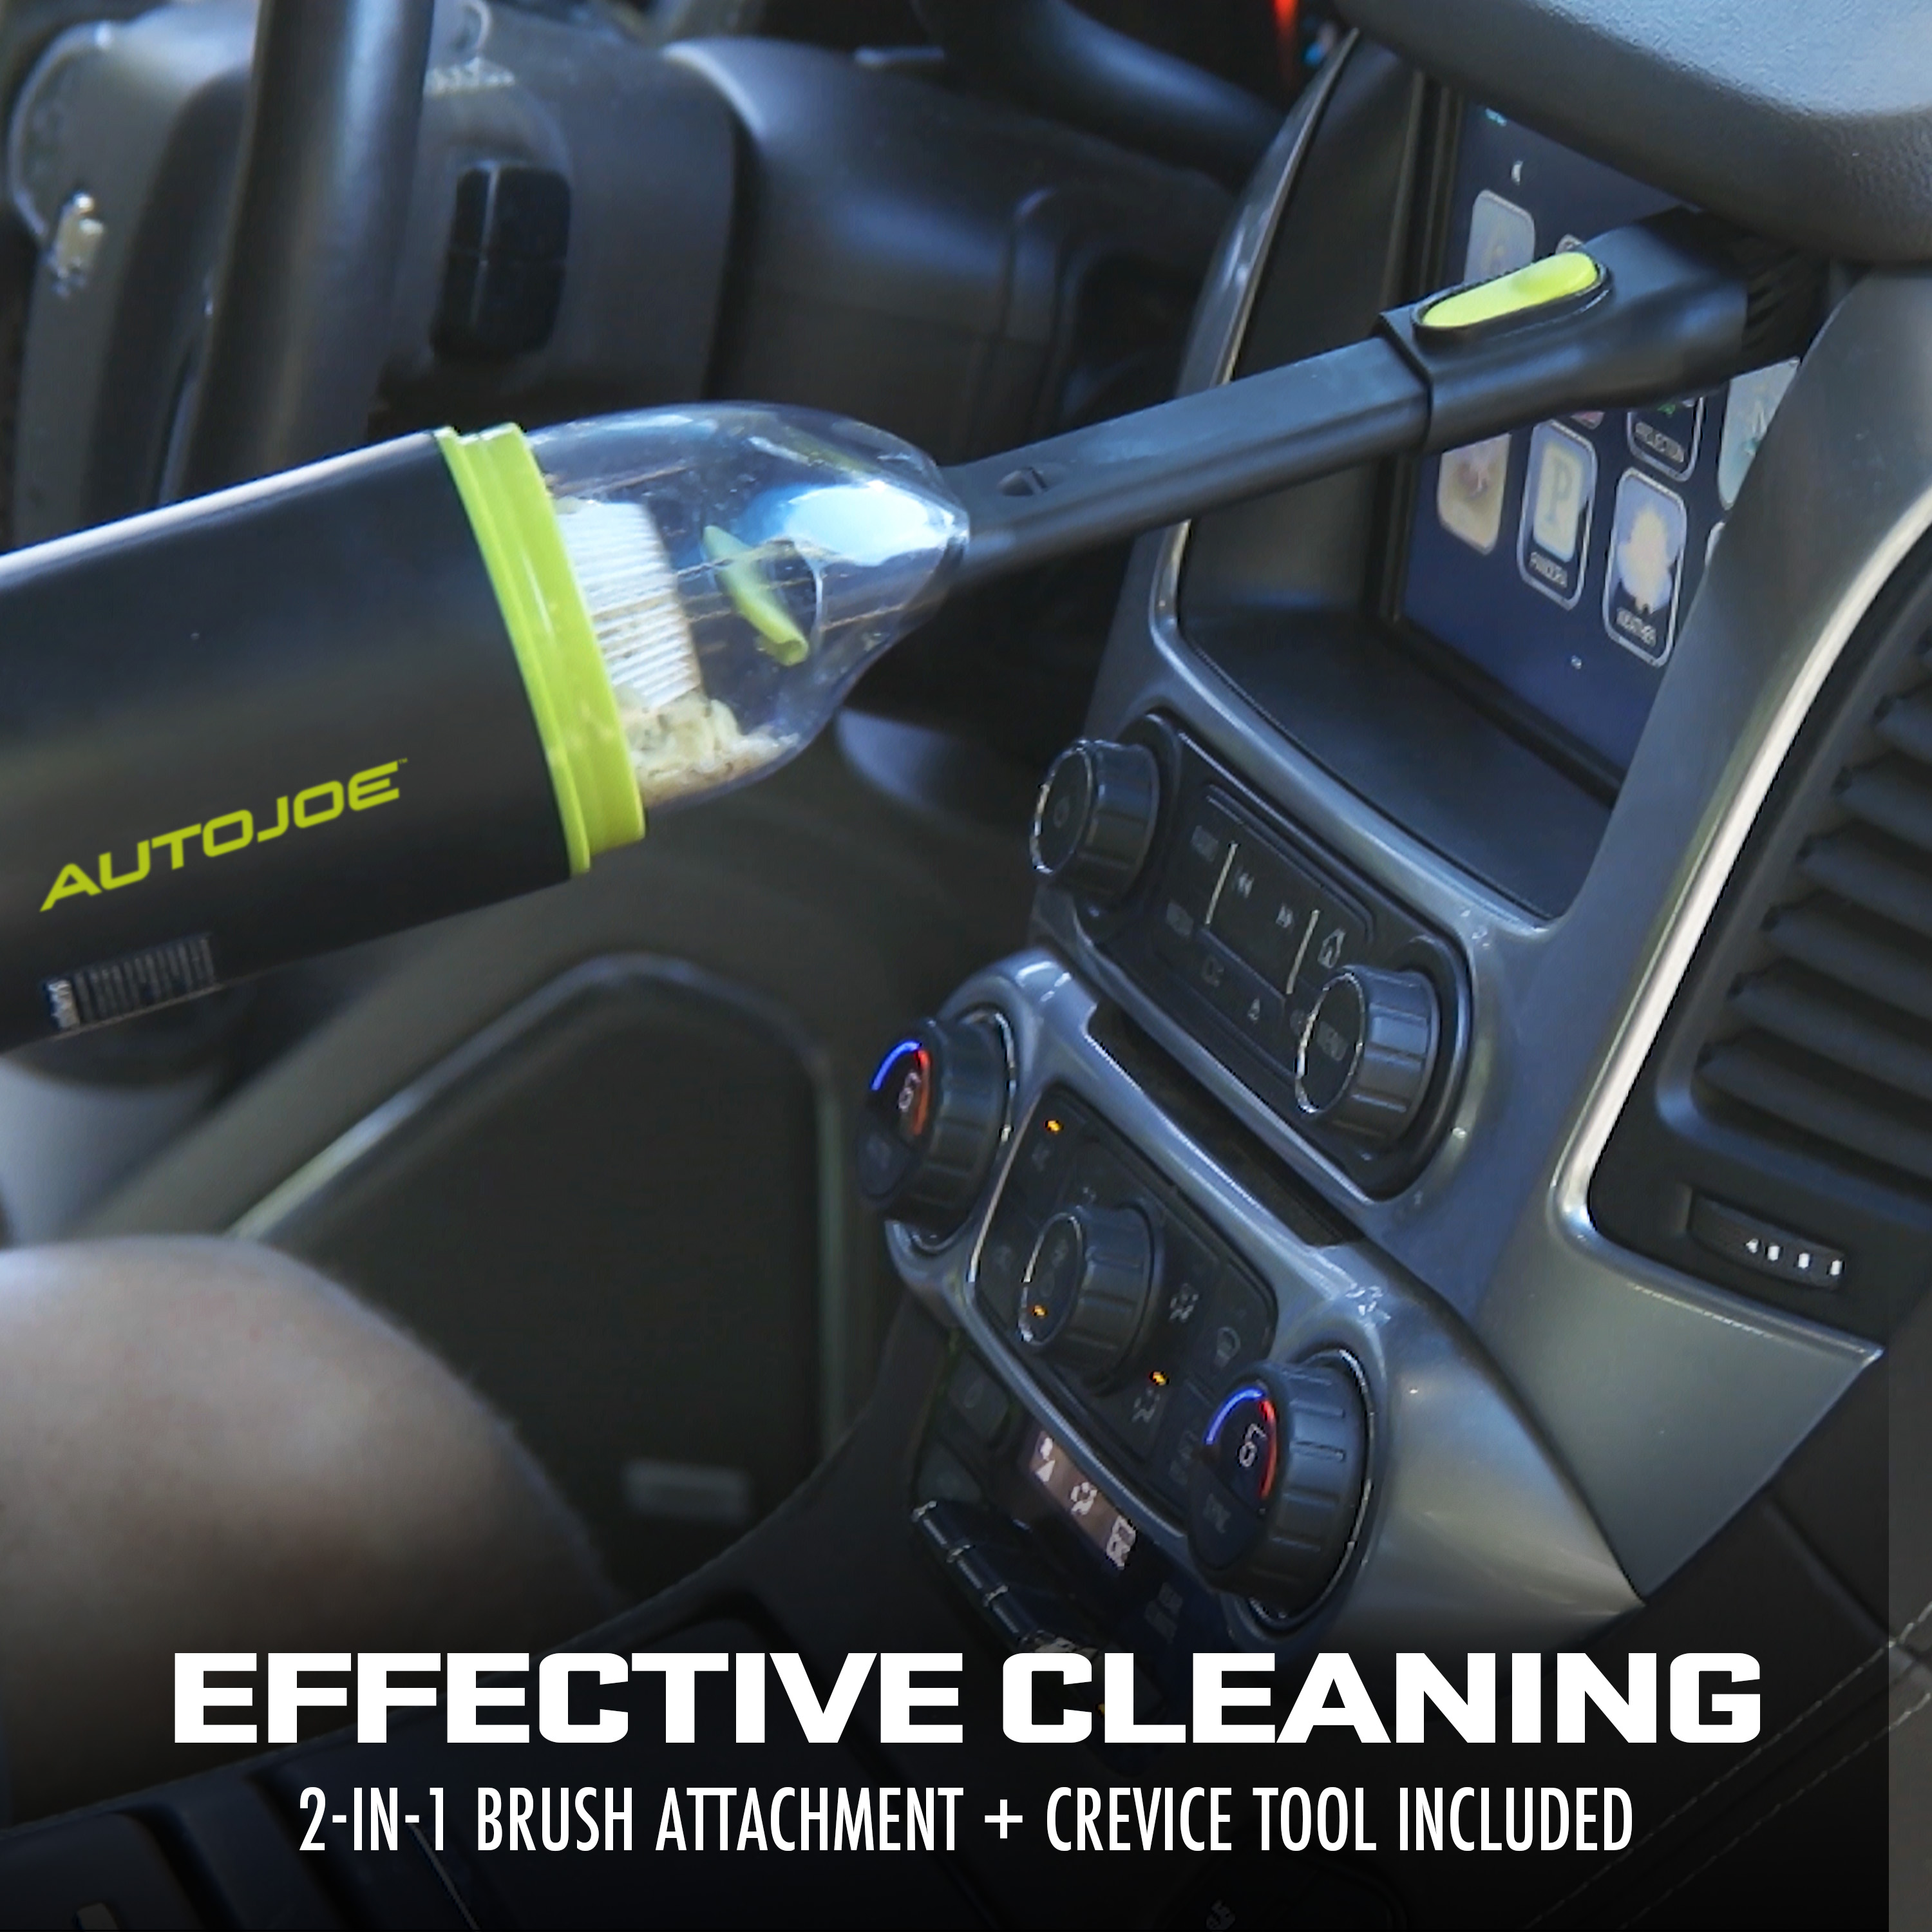 Auto Joe 8.4-Volt Cordless Handheld Vacuum Cleaner, HEPA Filter, for Home, Auto & RVs - image 5 of 14